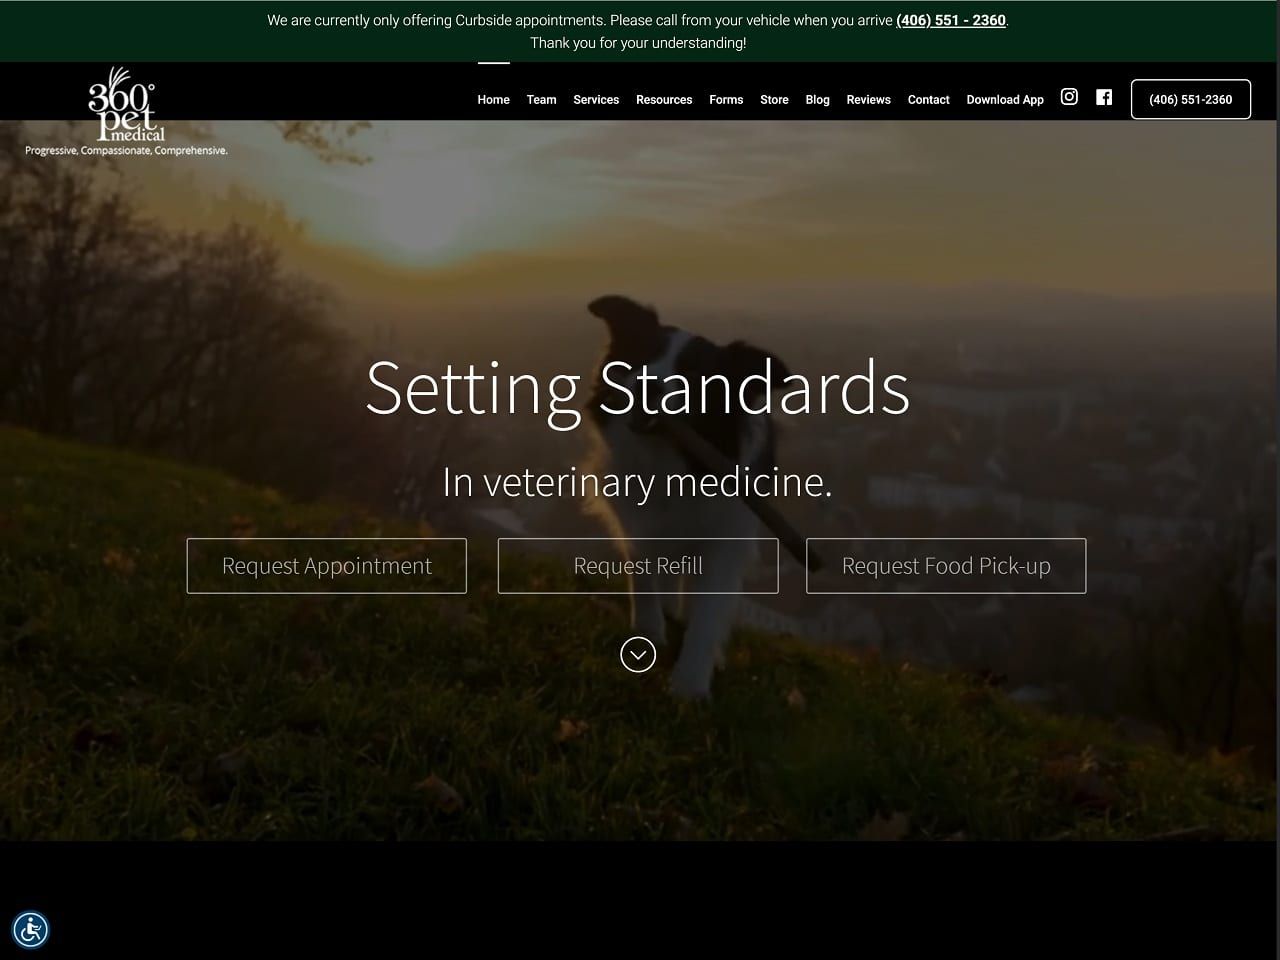 360petmedical.com screenshot1